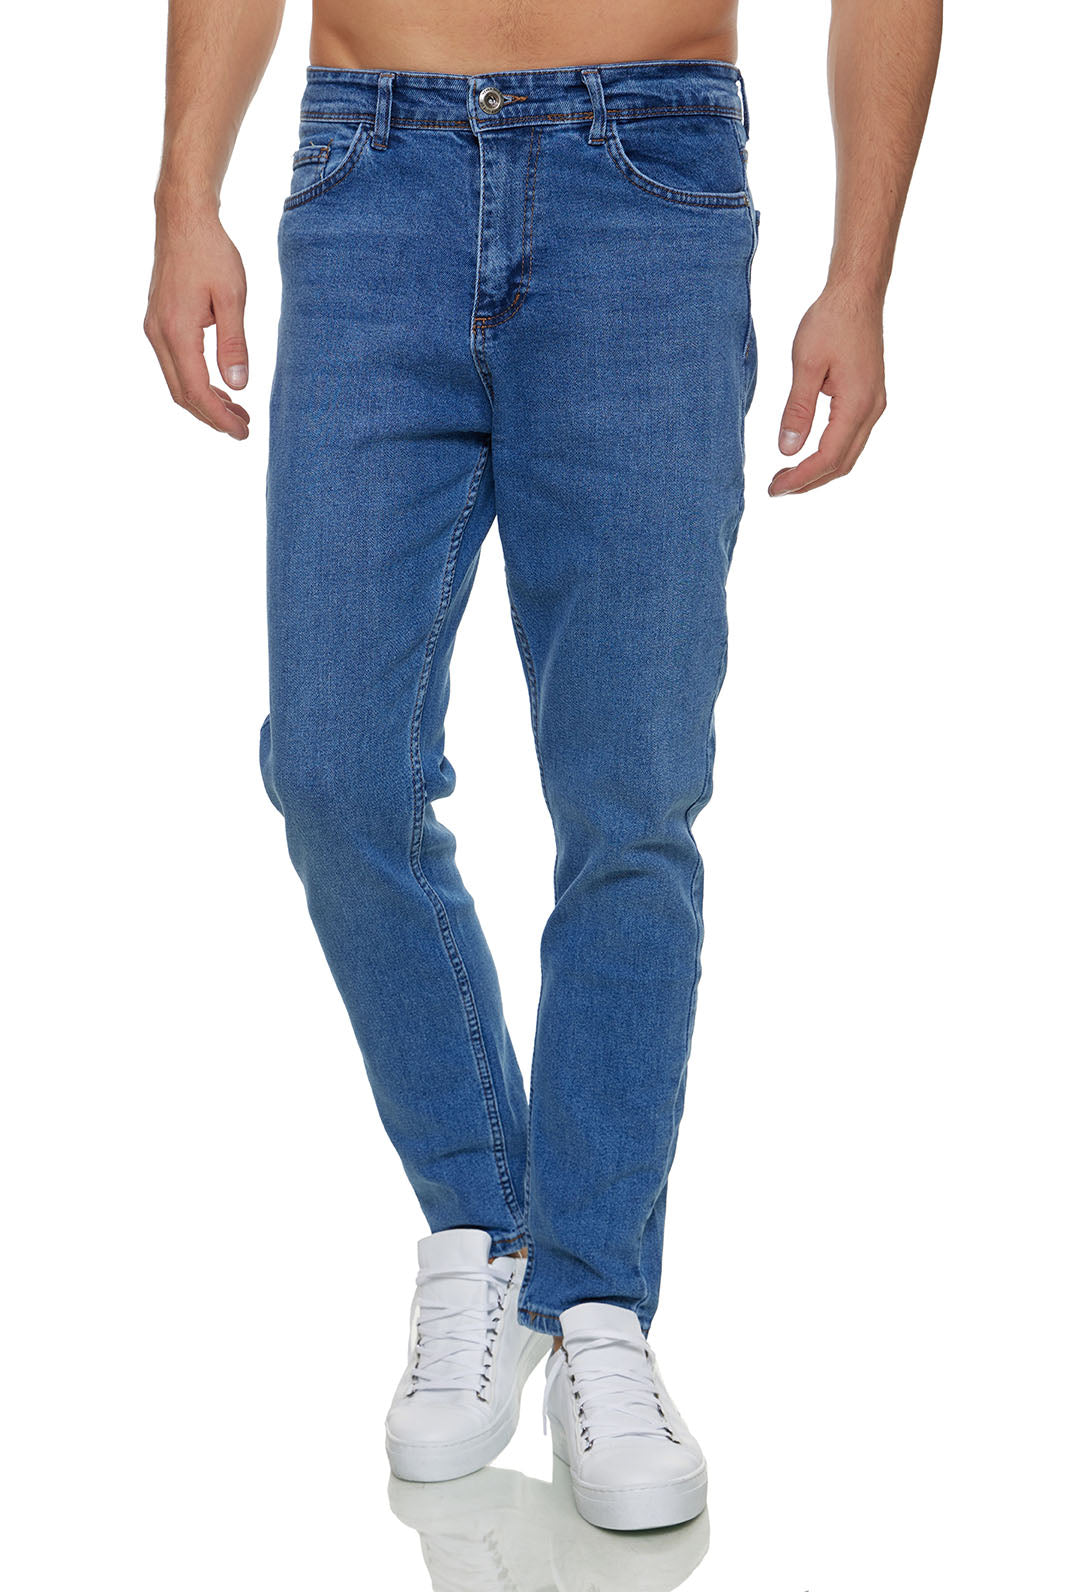 Men's Jeans, Mom (Casual) Fit, Model I8-16150, Light Blue or Blue – Denim  Fabrik